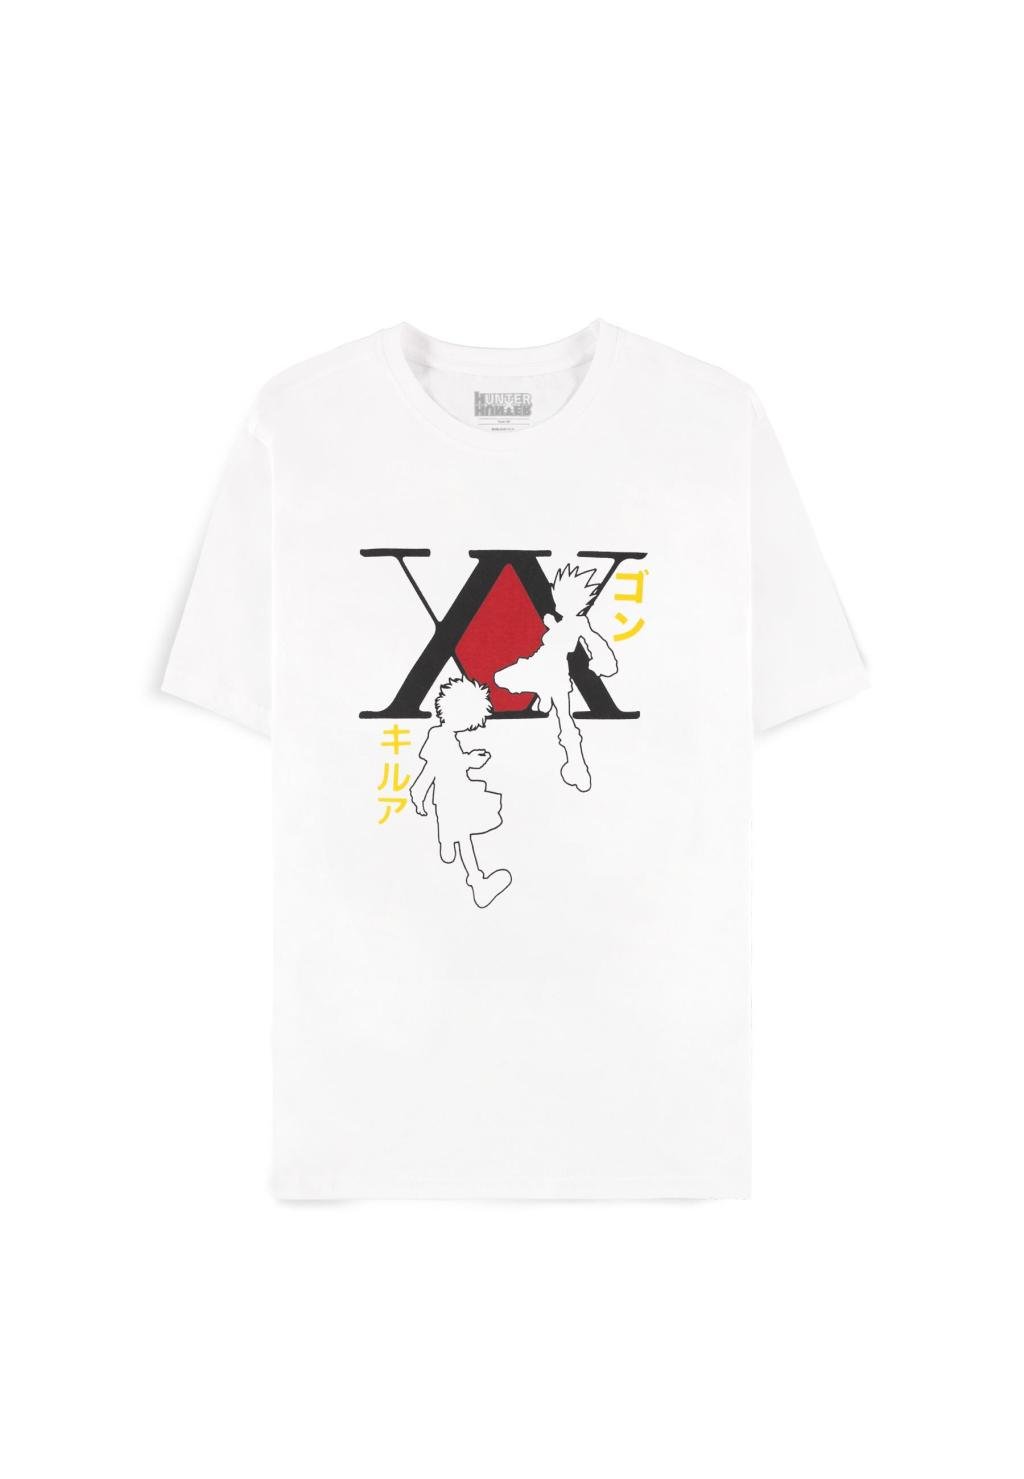 HUNTER X HUNTER - Gon &amp; Kirua - Herren T-Shirt (M)